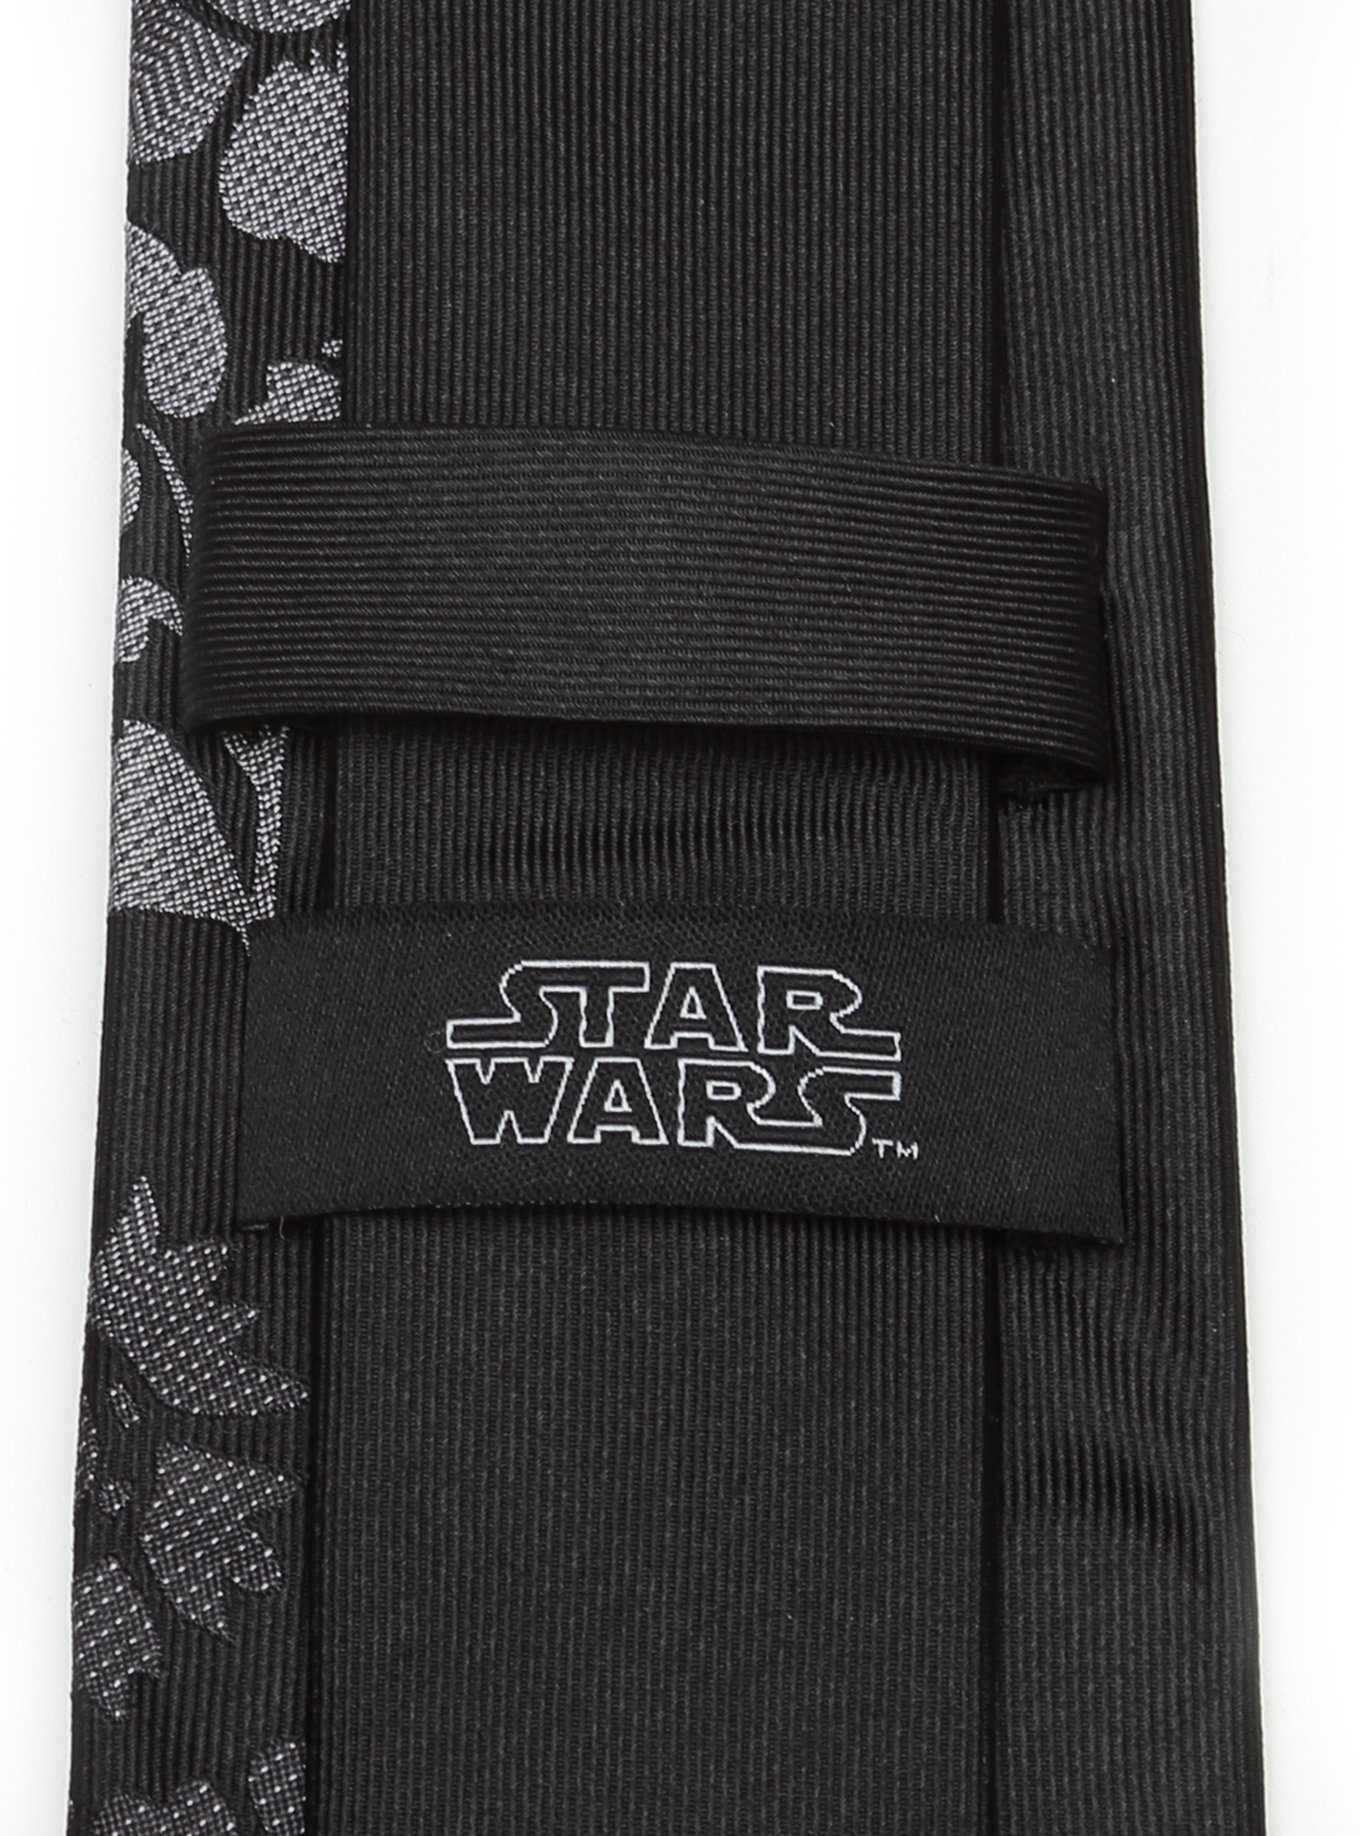 Star Wars R2D2 Floral Black Tie, , hi-res